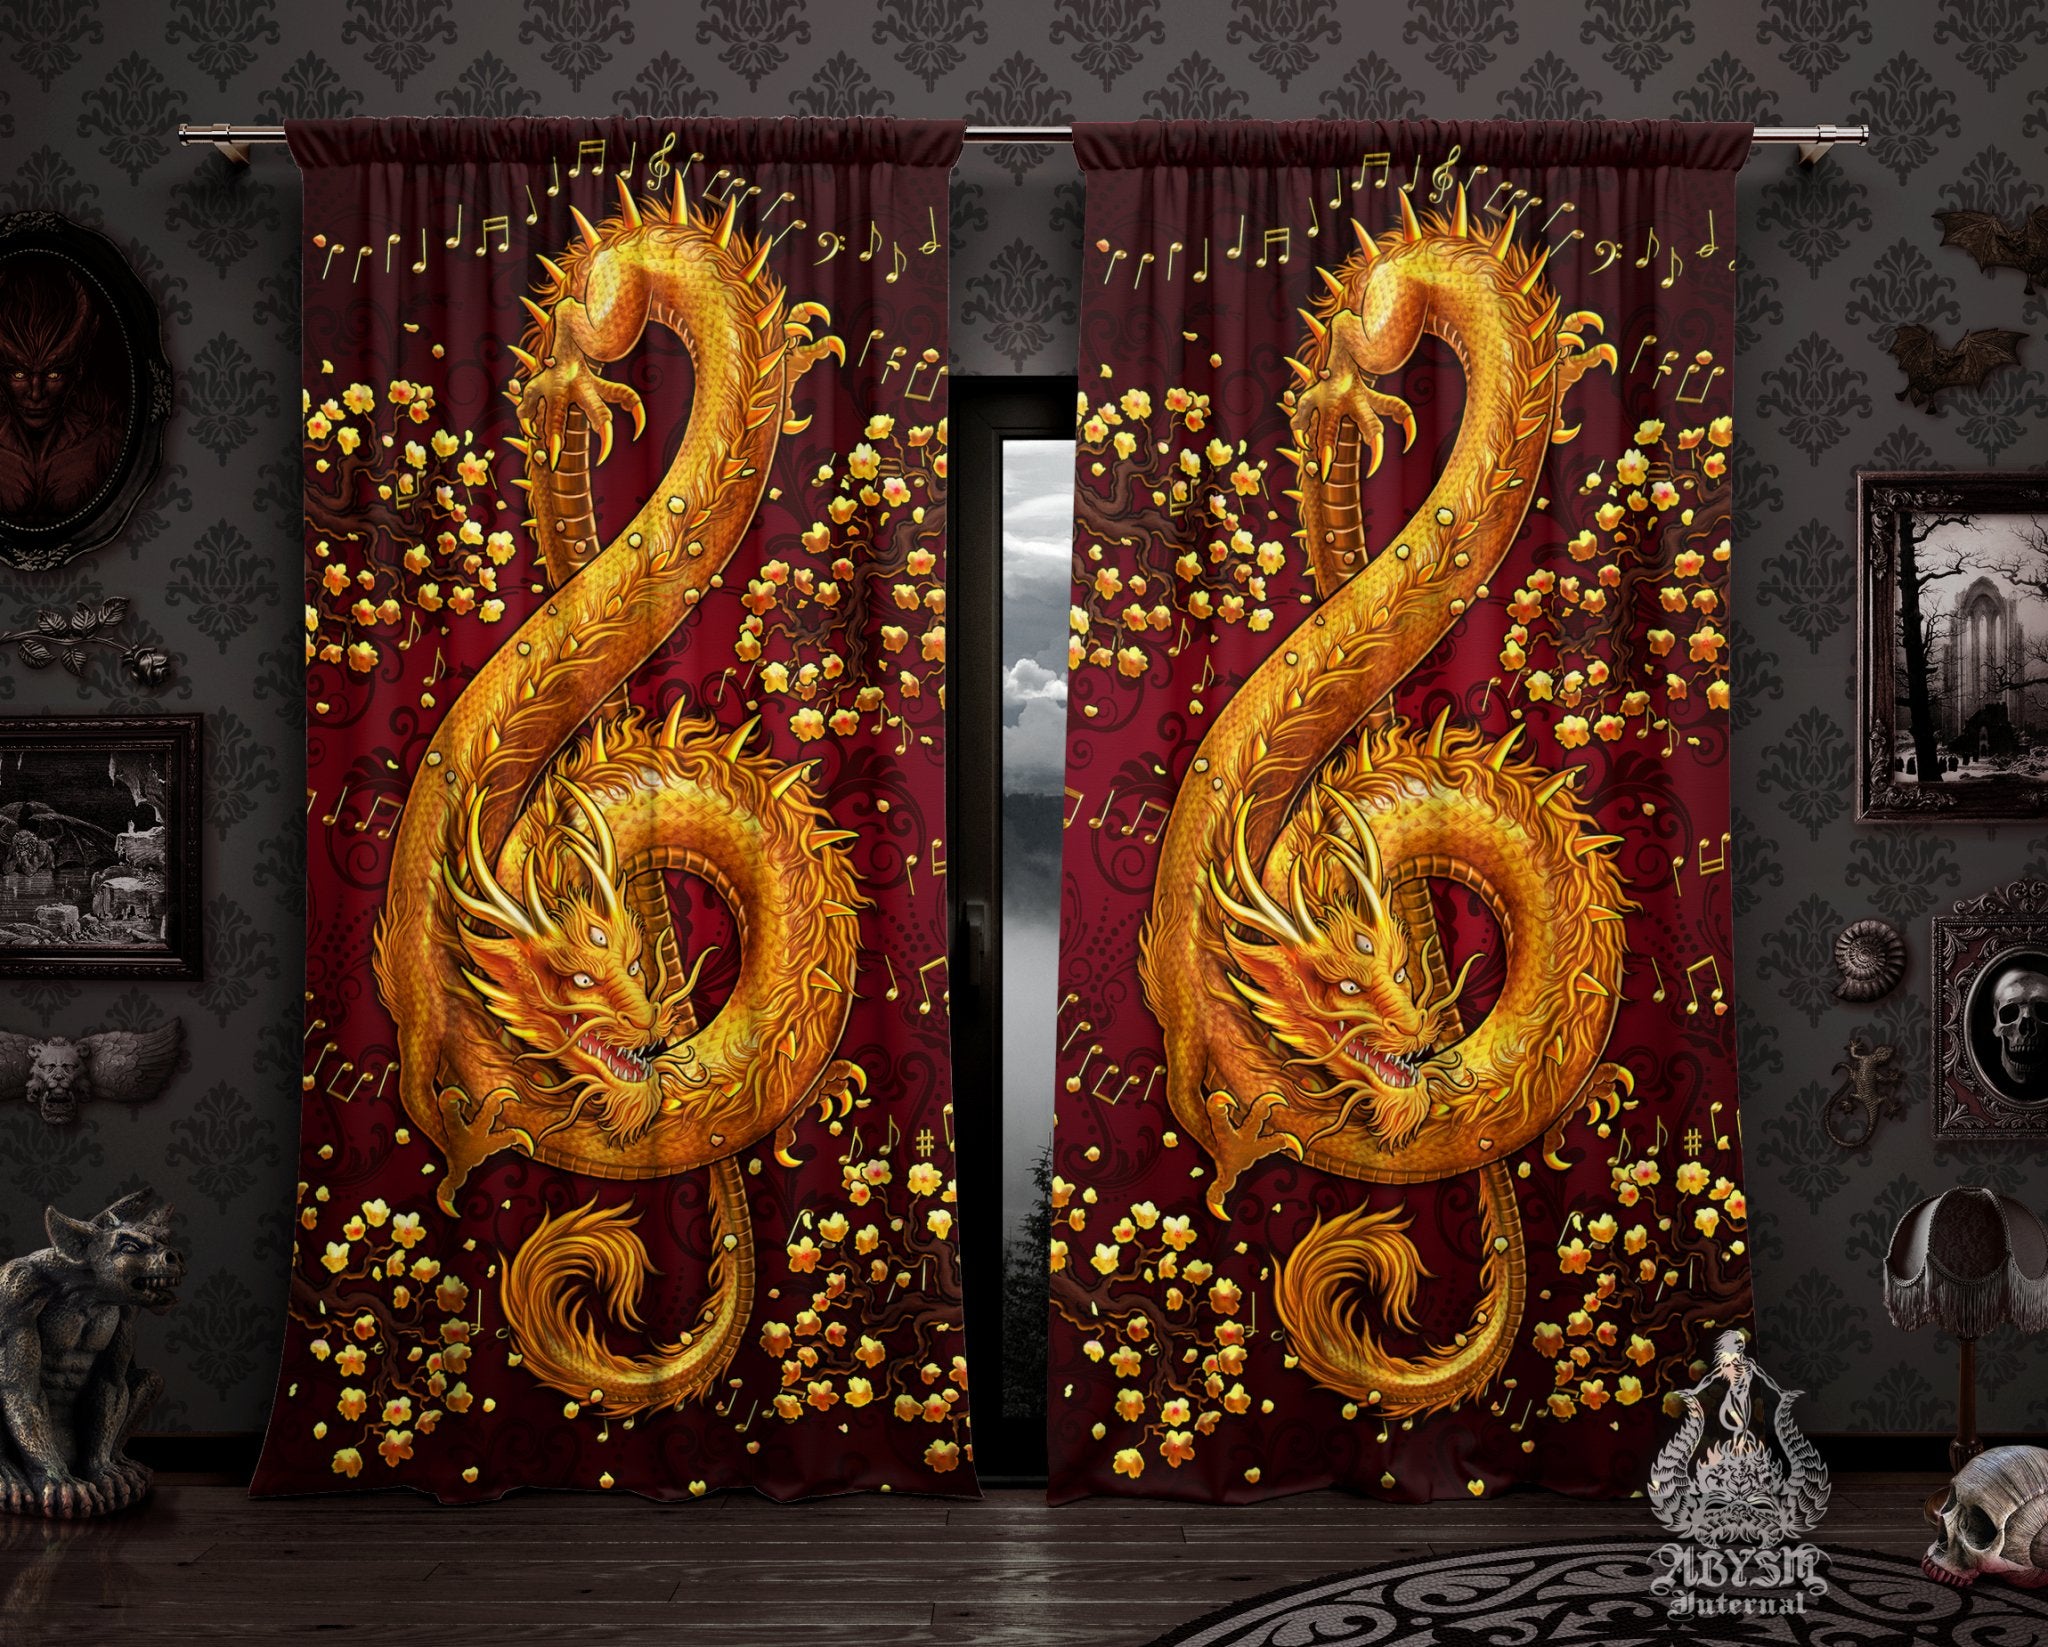 Gold Dragon Curtains, 50x84' Printed Window Panels, Treble Clef, Music Art Print, Elegant Room Decor - Red - Abysm Internal